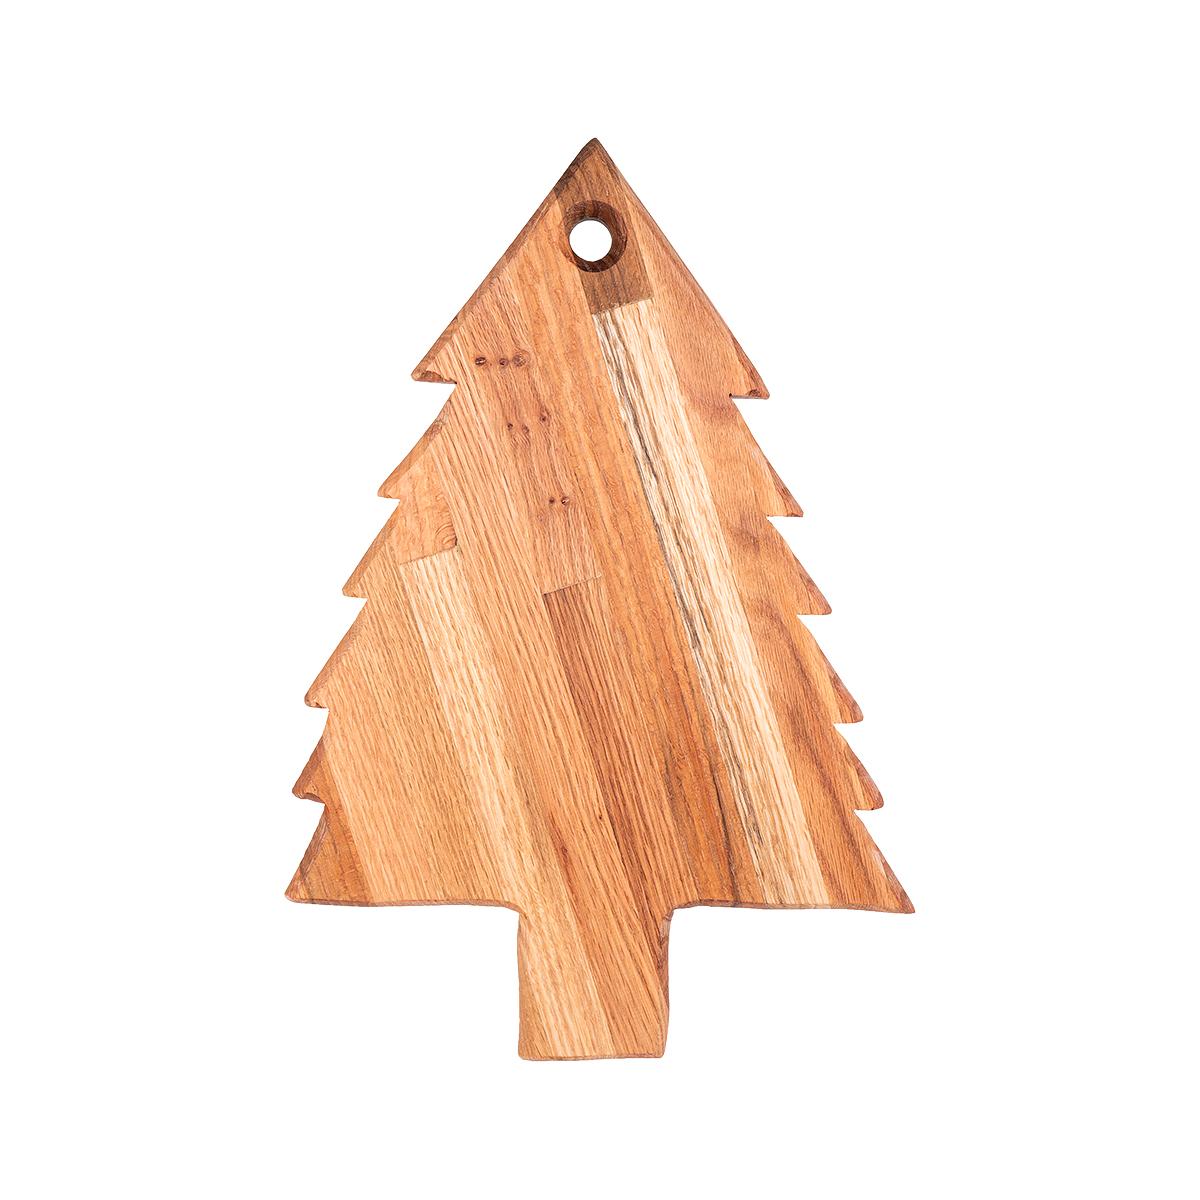  Medium Pine Tree Cutting Board